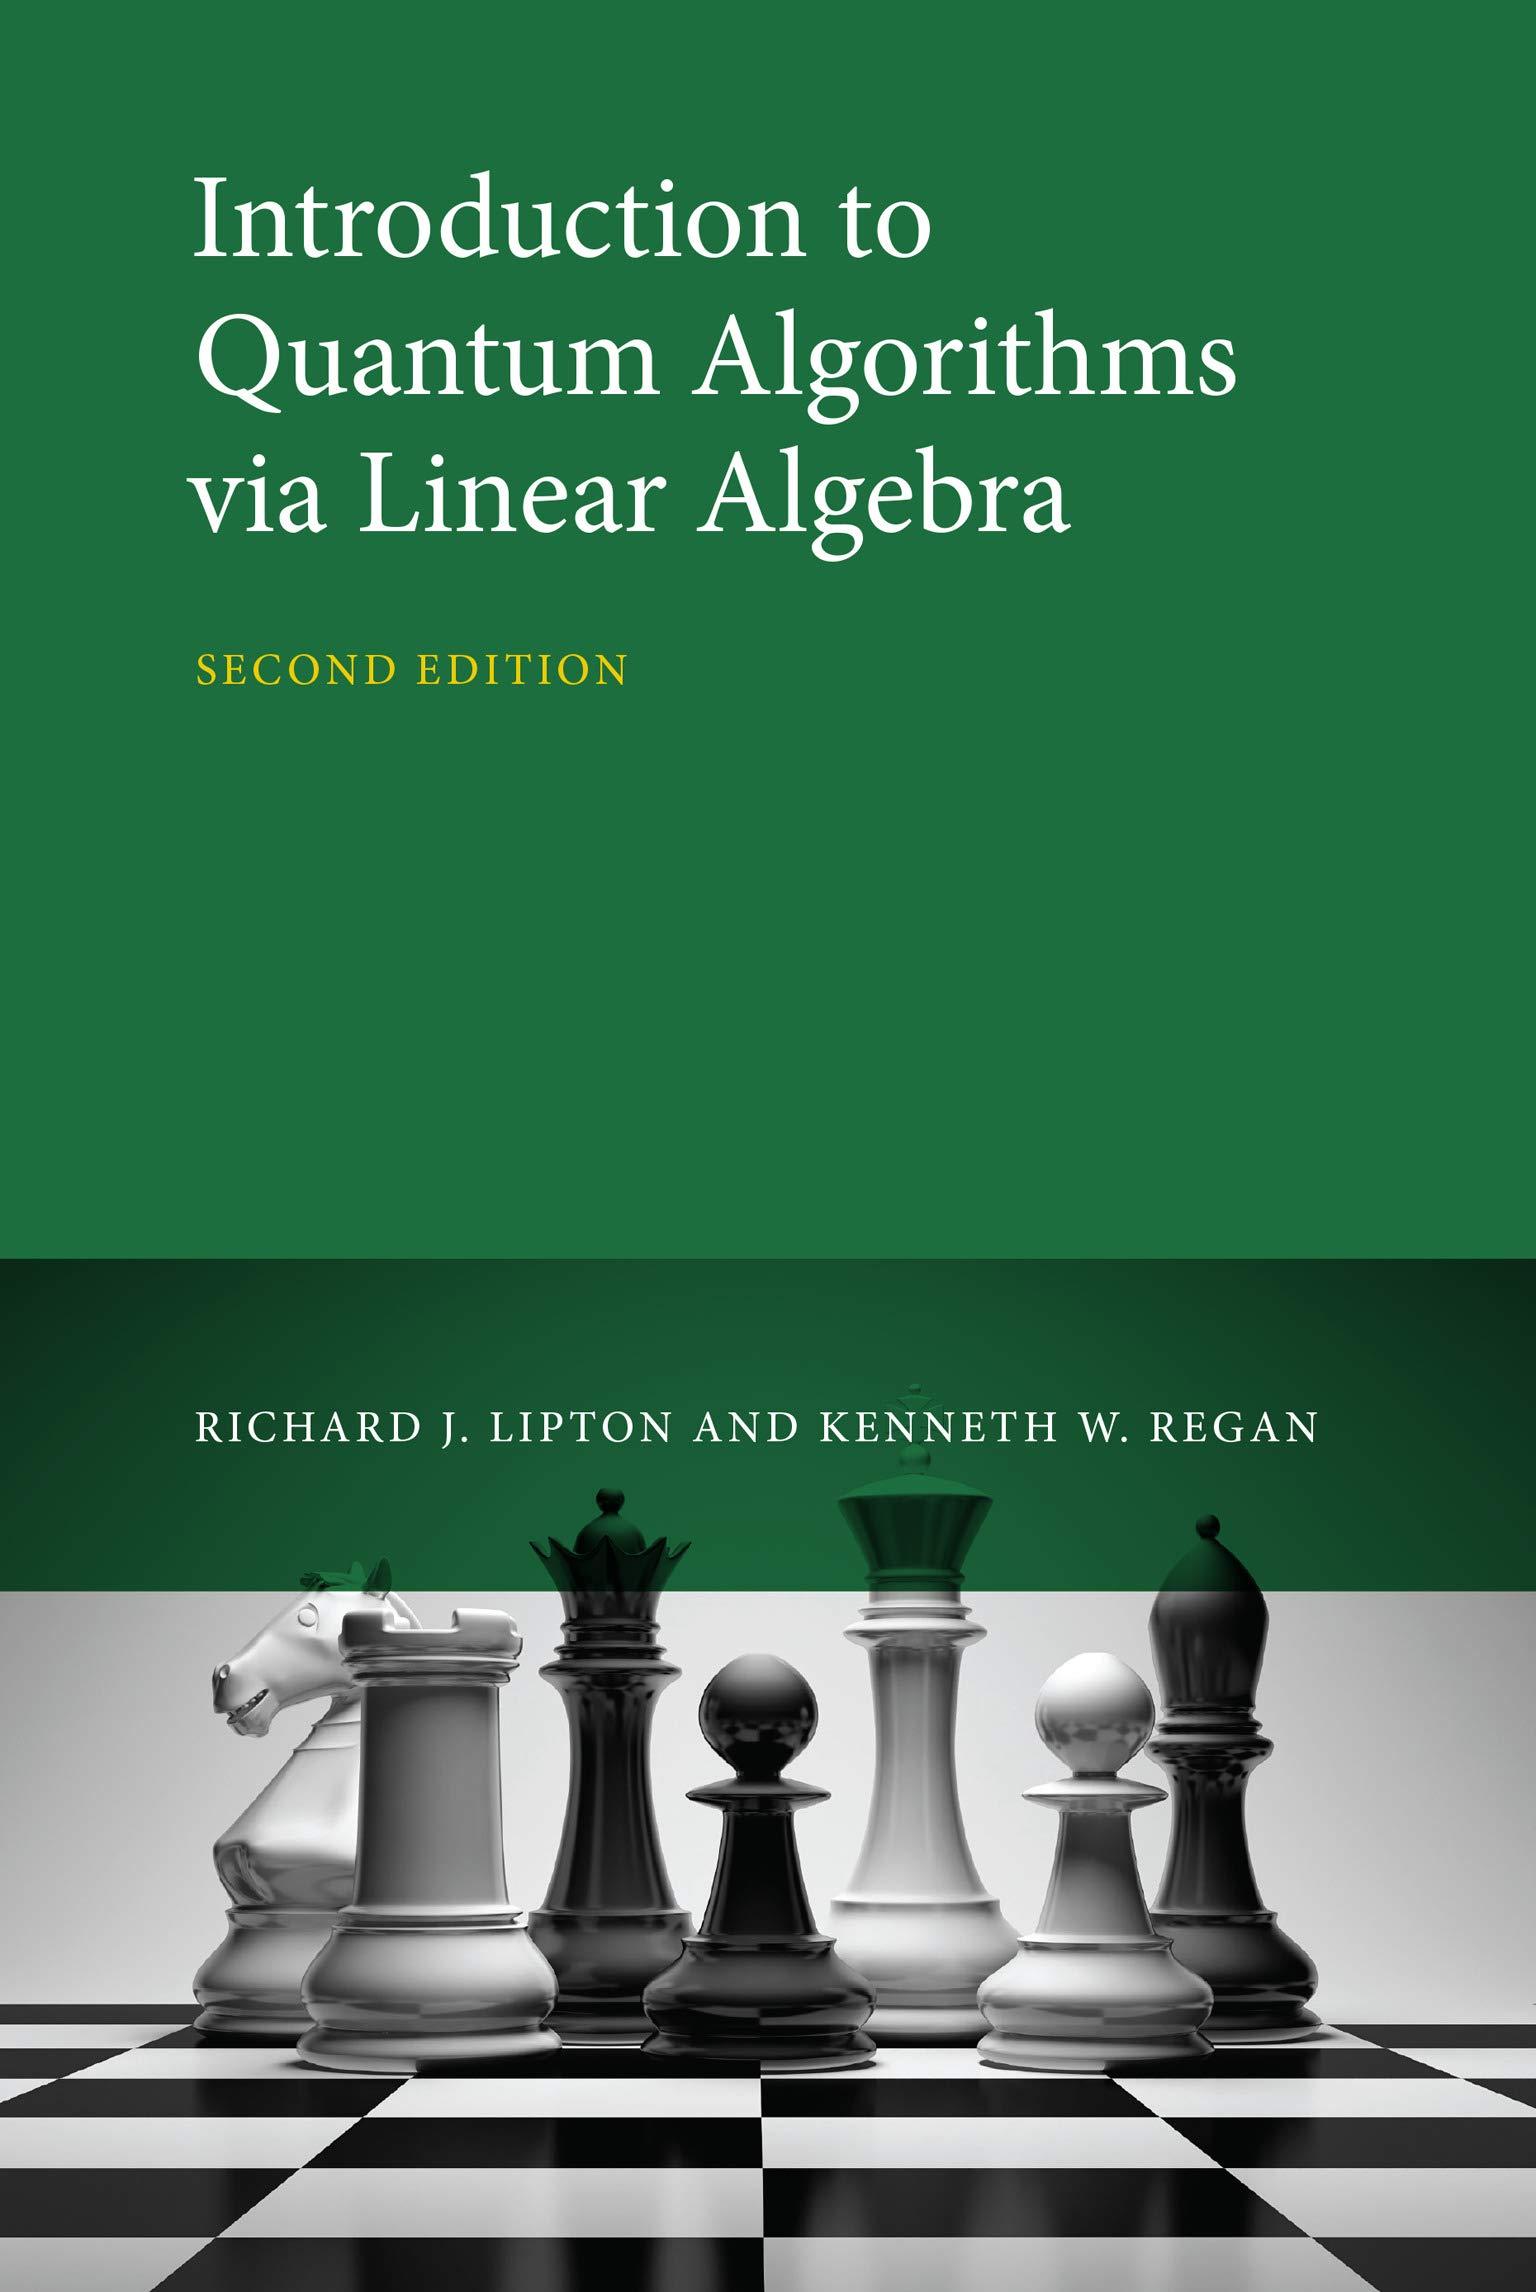 introduction to quantum algorithms via linear algebra 2nd edition richard j. lipton, kenneth w. regan